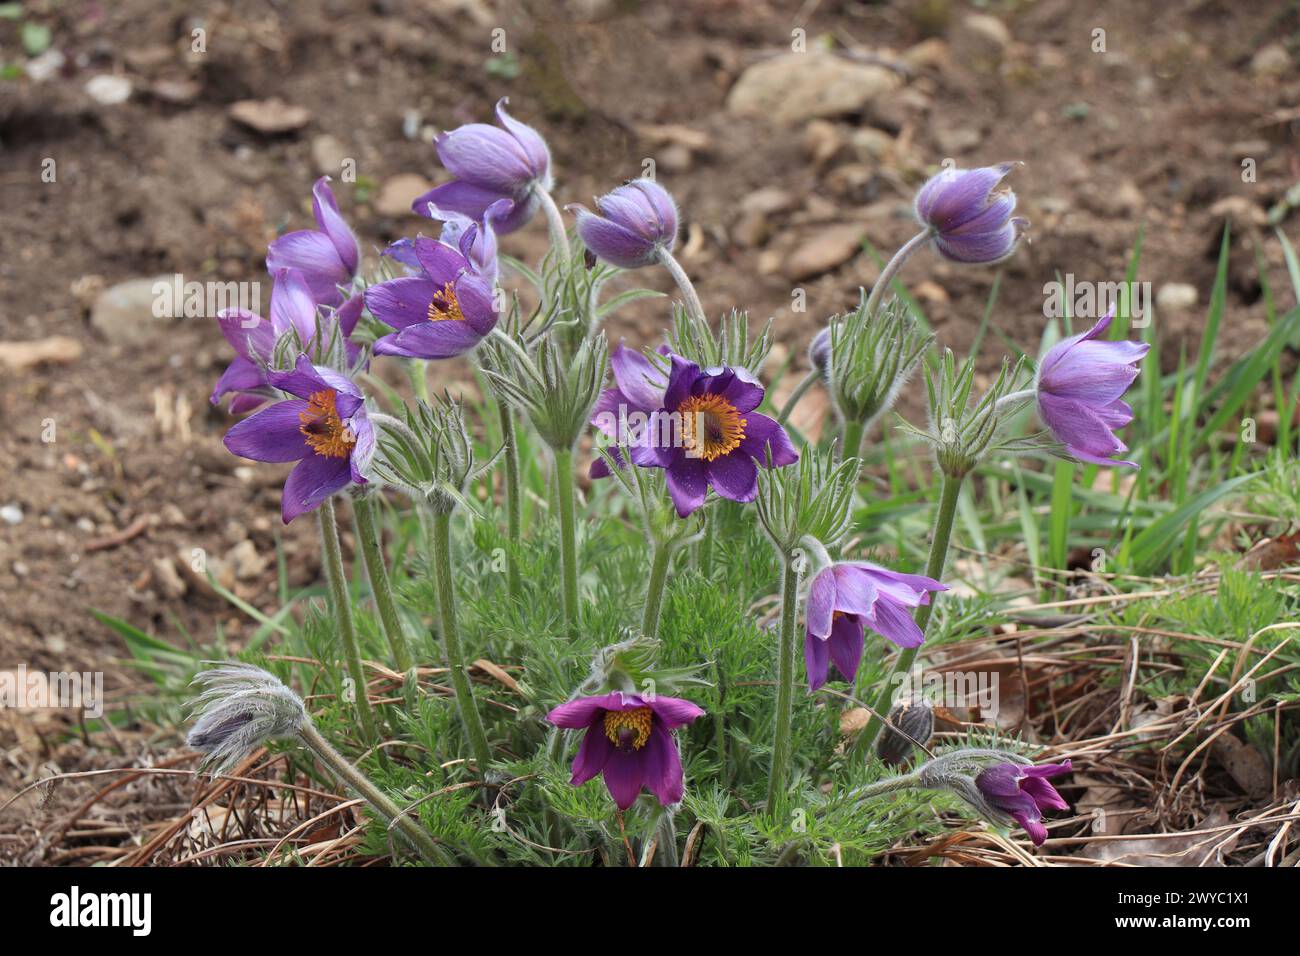 Violette Pasque Blume Anemone Pulsatilla vulgaris in der Natur Stockfoto